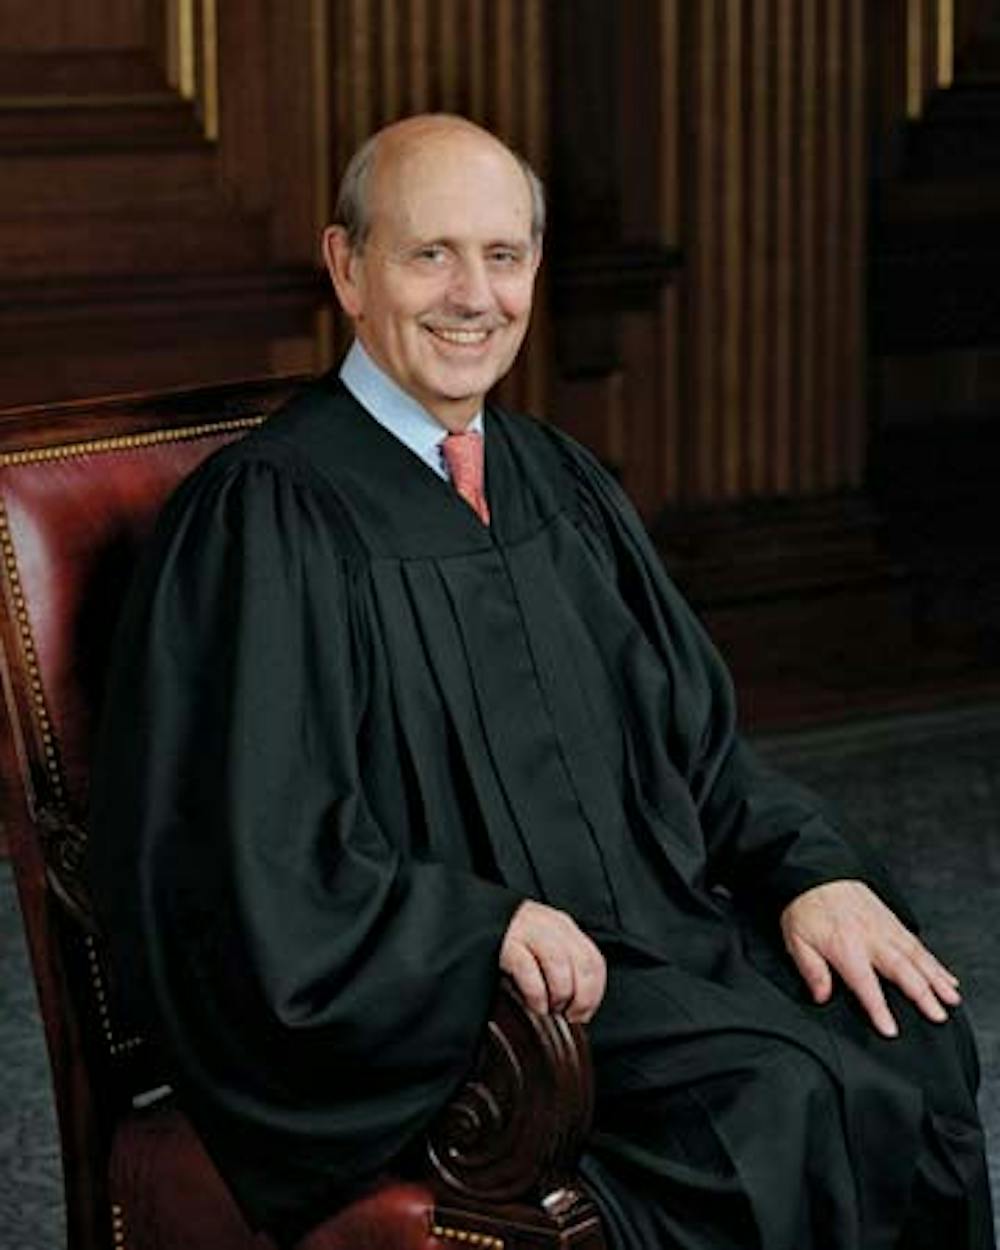 <p>Stephen G. Breyer, one of the nine Supreme Court Justices, announced his retirement after his term of almost 27 years (Flickr/”<a href="https://www.flickr.com/photos/cknight70/8681466596/in/photolist-ee9Myy-pwoRPY-oa1r4G-rbUh3s-azLCmQ-a7Ttts-azHwbt-azHArr-btfutY-azHApH-azLaFC-azL8Tu-azHuz4-azLg5S-azHtLr-azLfKC-azHu6R-azHvkF-oa4ieu-azHAm2-azHvbR-azLa8U-azHuox-azLds7-azL94y-azLbkf-btygP7-azLdHb-azHsWH-azLdo5-azLeFQ-azLcHj-azLb41-azHu26-nUB89Z-azHuZe-azLagW-azLffs-azLfVA-azHuMP-azHyMM-azHv7V-azHxQV-azHvXa-azHvPX-azHt9H-azHyqK-azHw3n-azL9j9-azLdej" target="">Justice Stephen G Breyer</a>” by Cknight70, April 25, 2013).</p><p><br/><br/><br/></p>